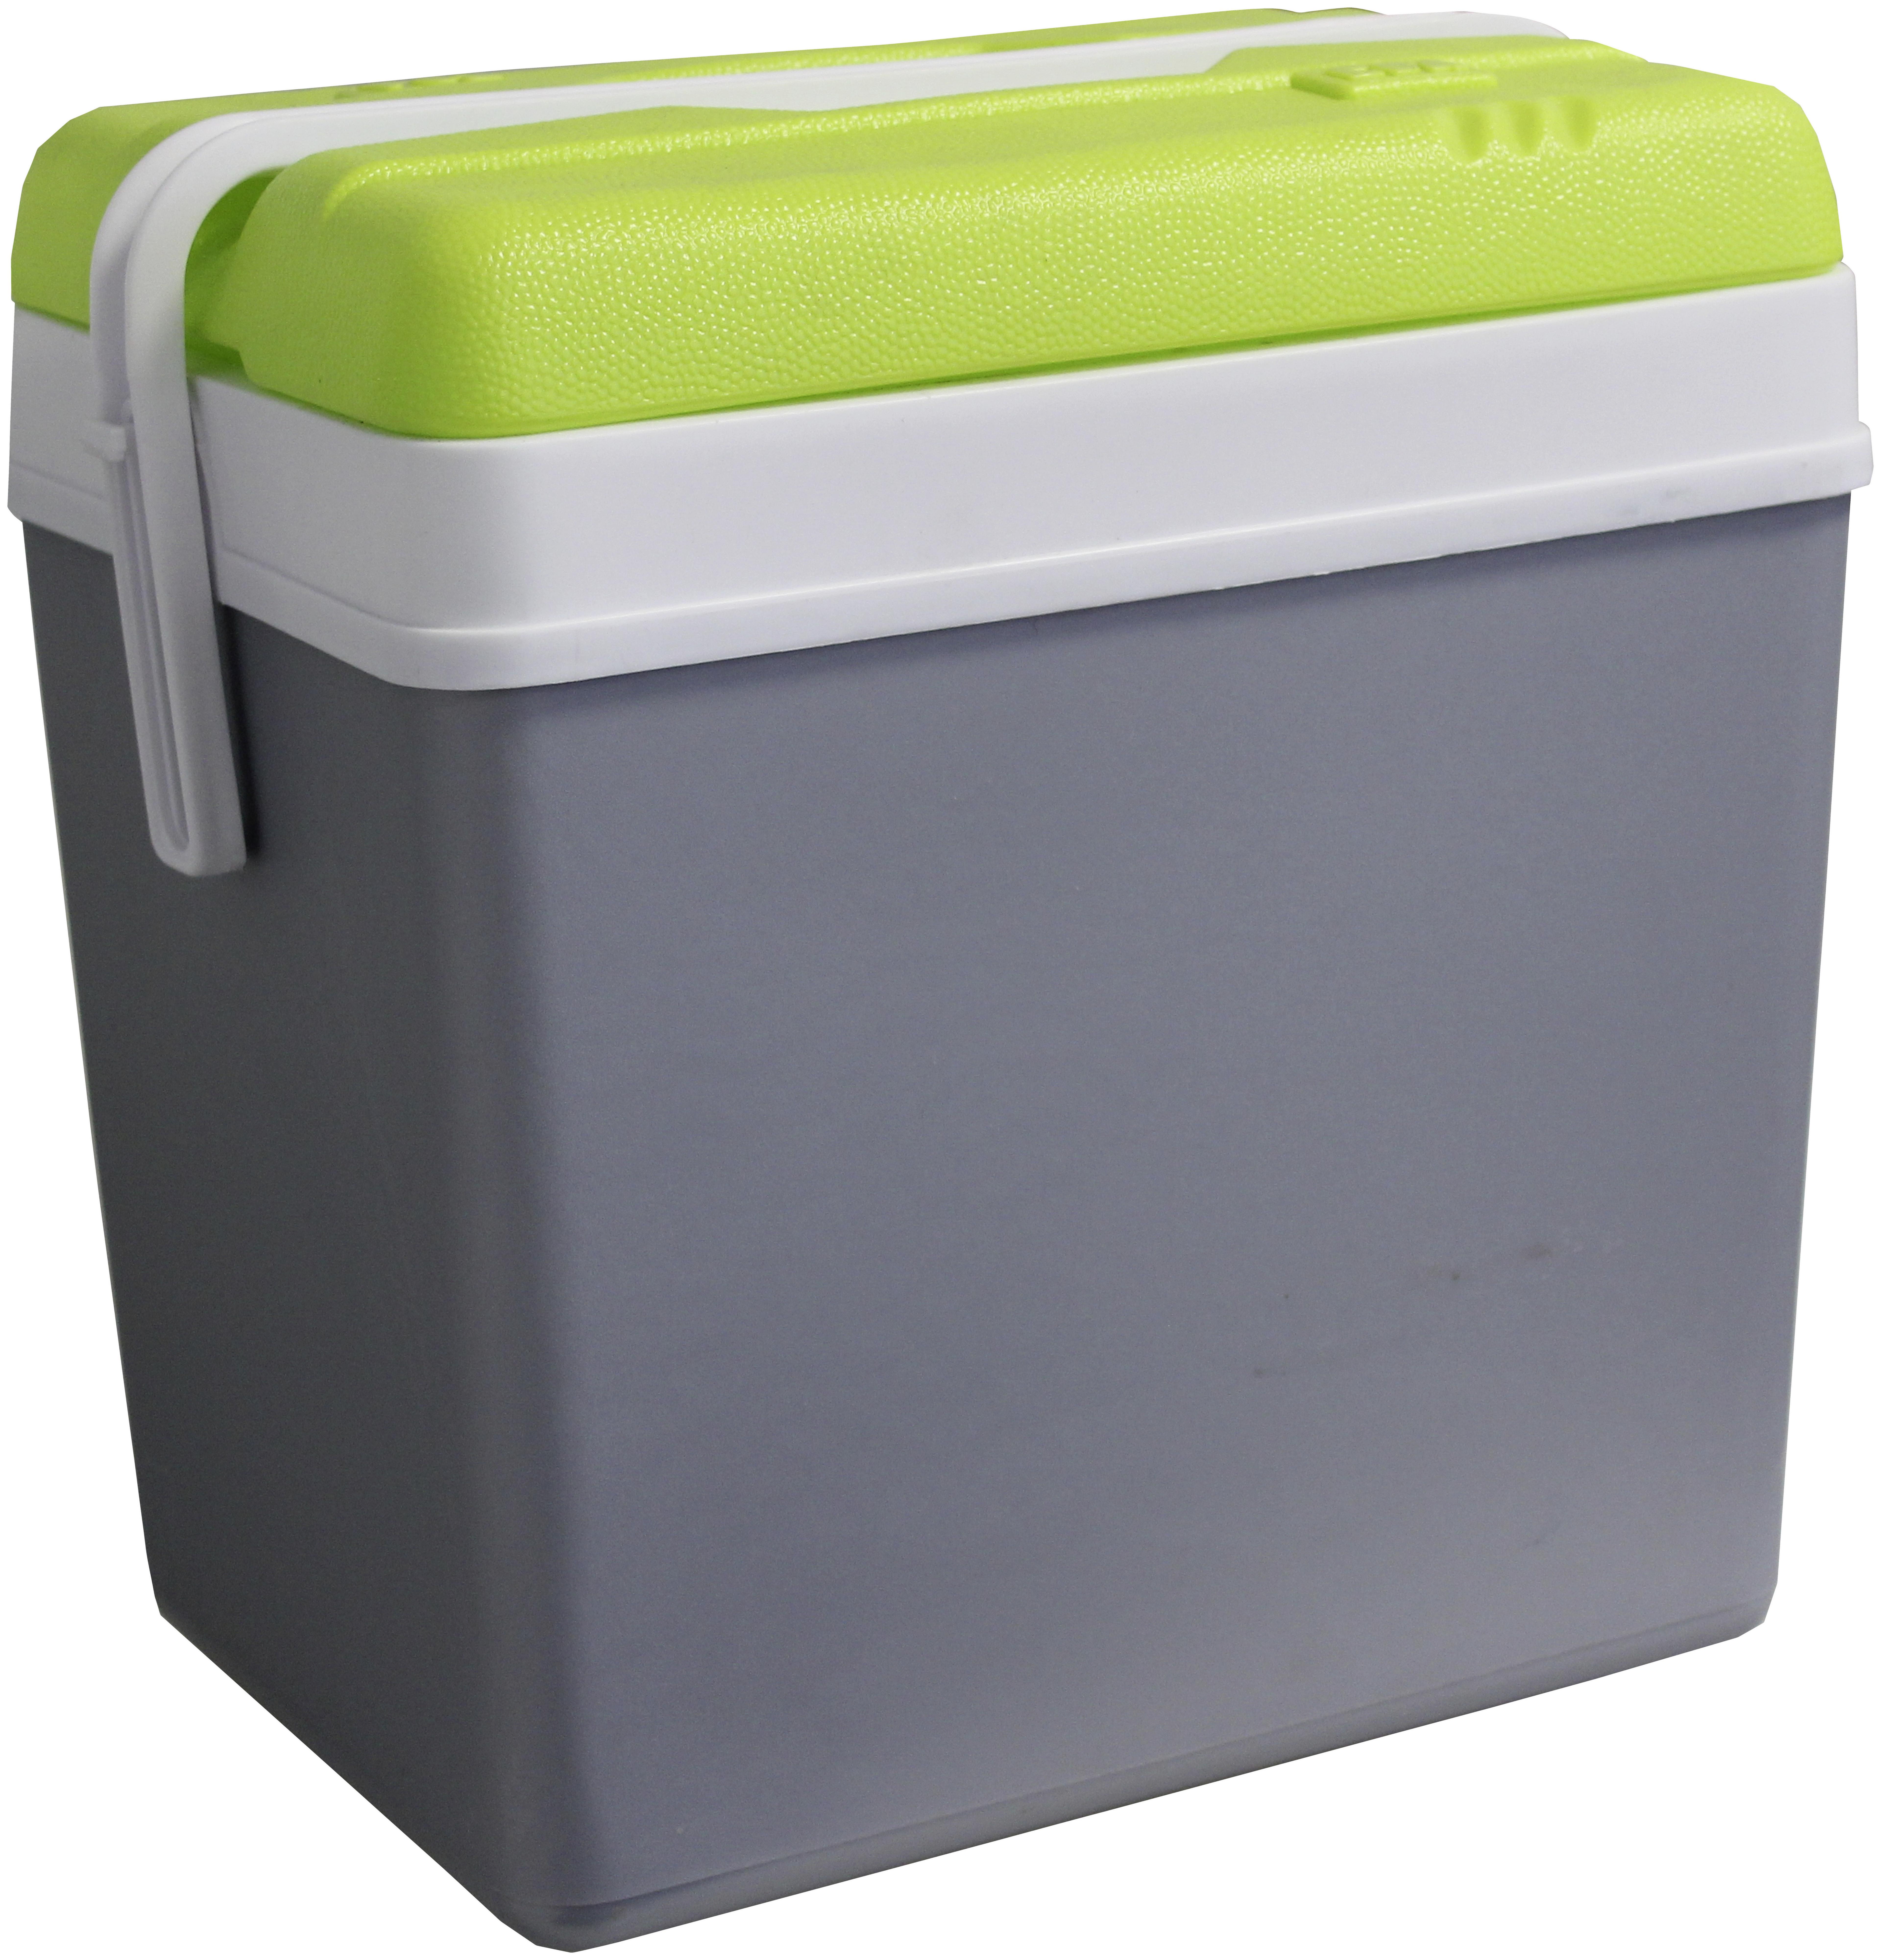 Kühlbox 24 Liter mit Tragegriff, Grau/Grün - Grau/Grün, MODERN, Kunststoff (35/25/39cm)